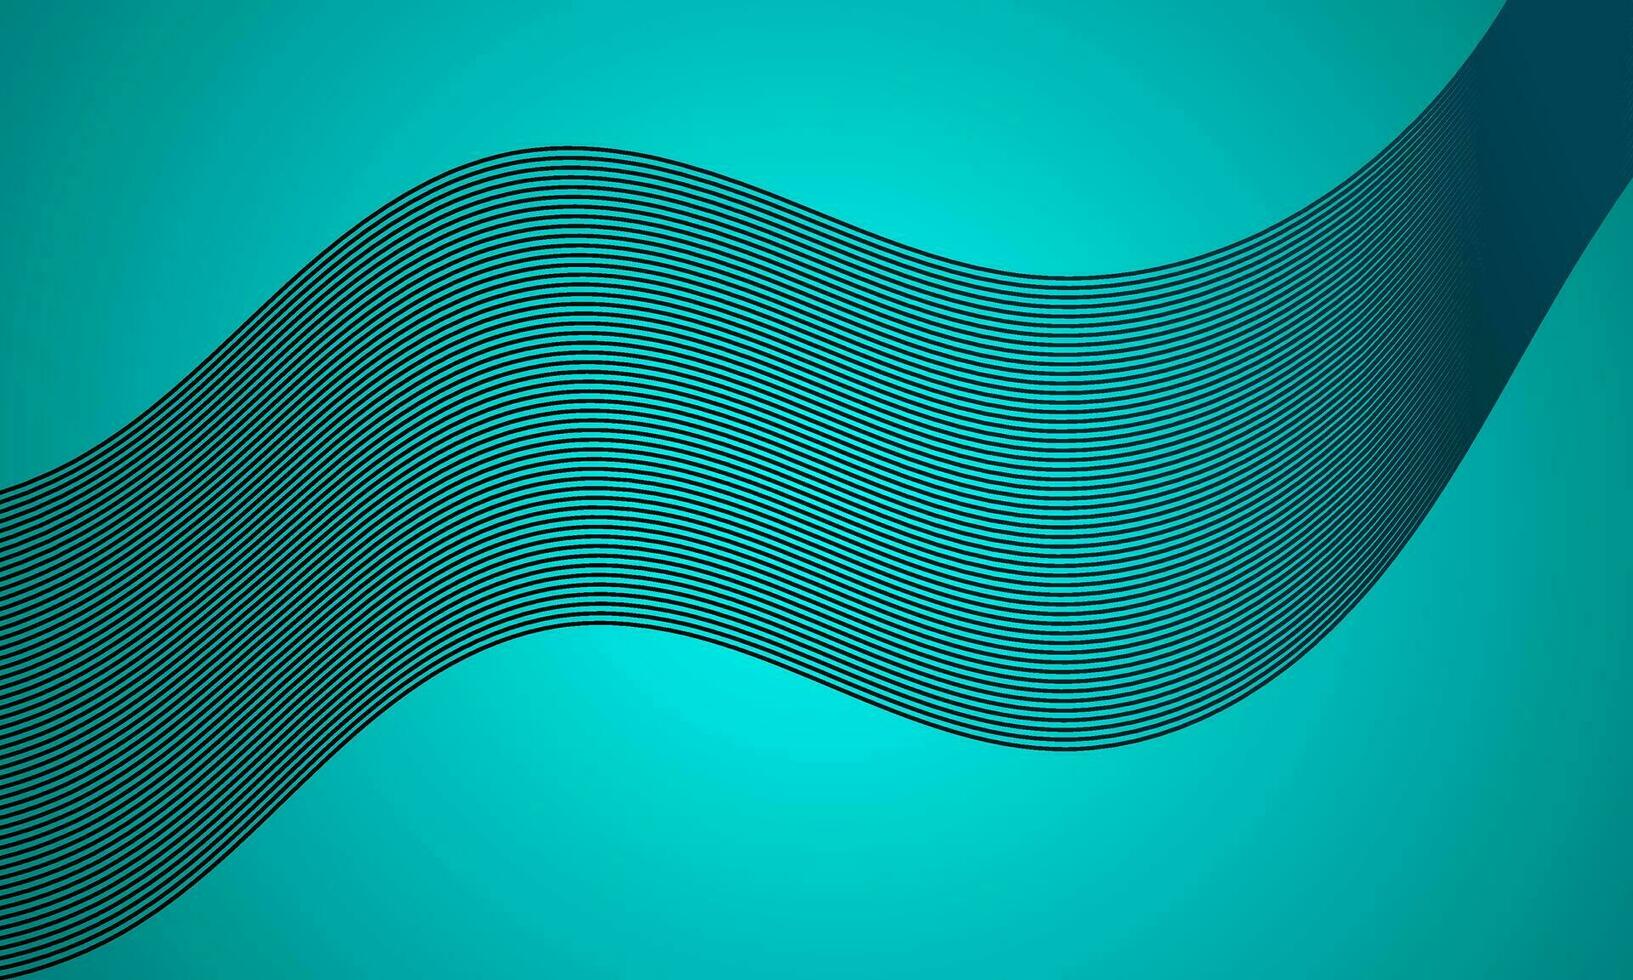 Abstract line texture on light blue background vector illustration. Smooth Design element. Curved twisted slanting design or waved line pattern. For business, digital, science